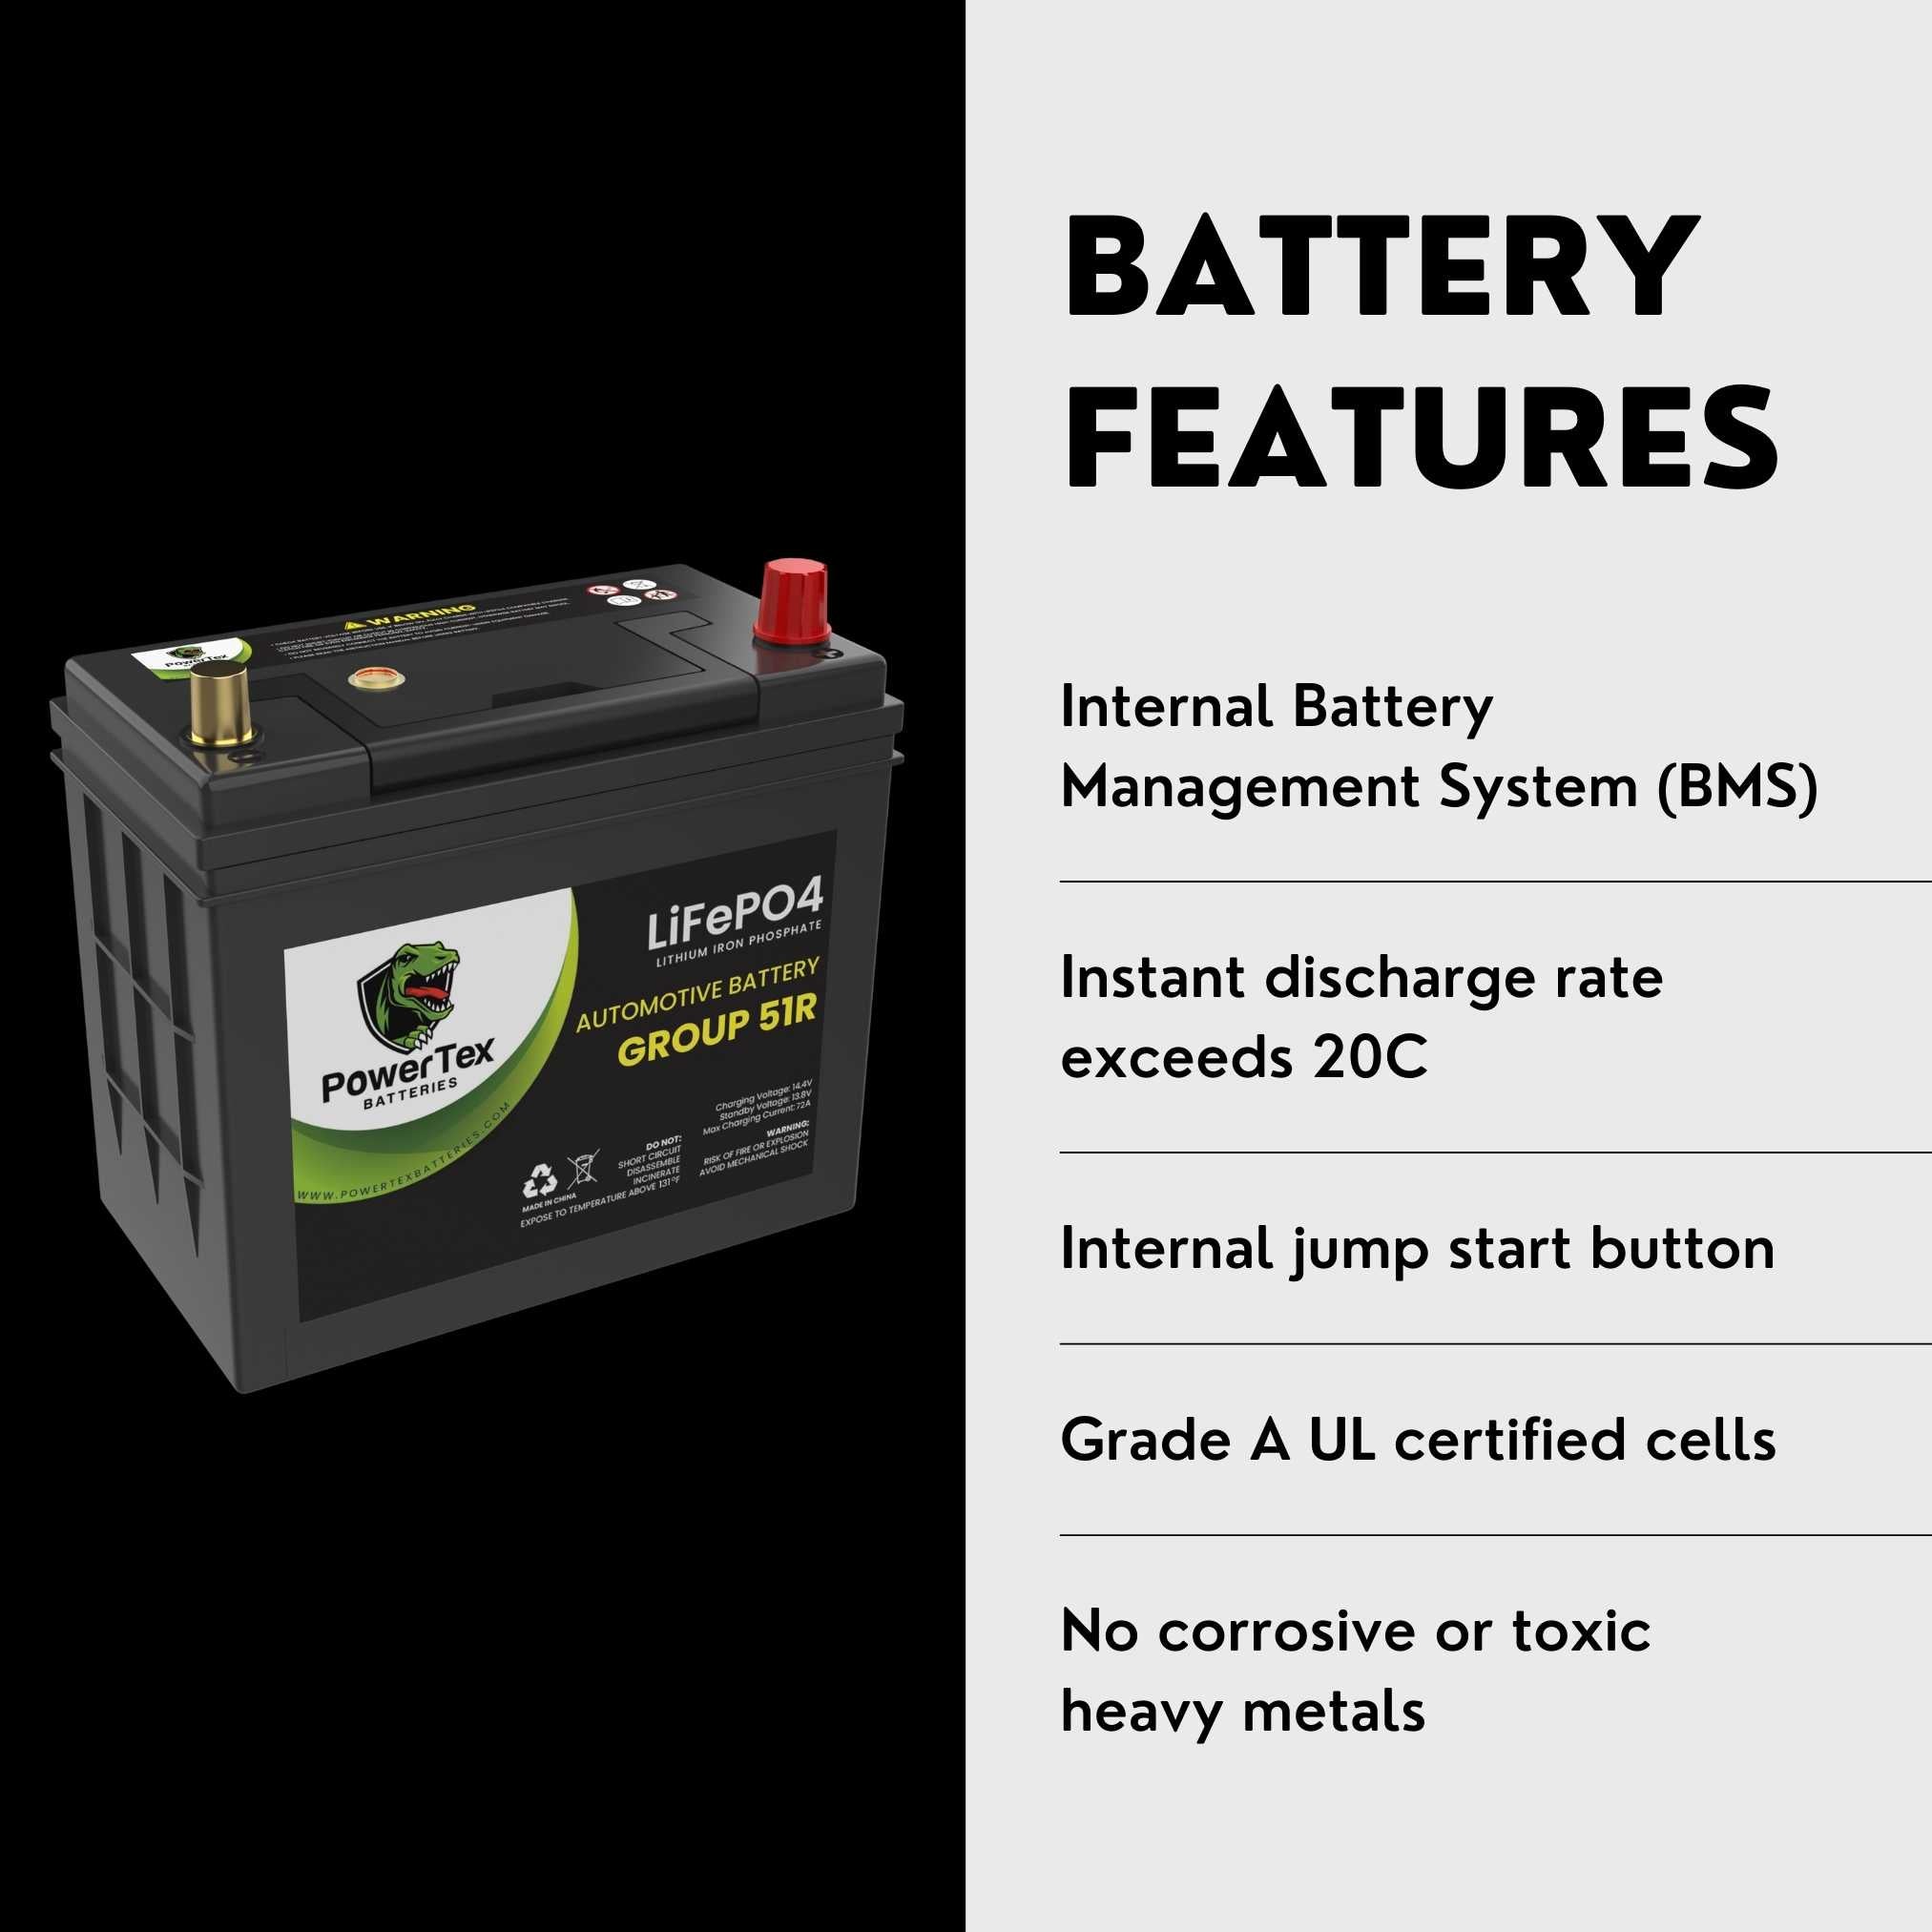 2013 Honda Accord Car Battery BCI Group 51R Lithium LiFePO4 Automotive Battery